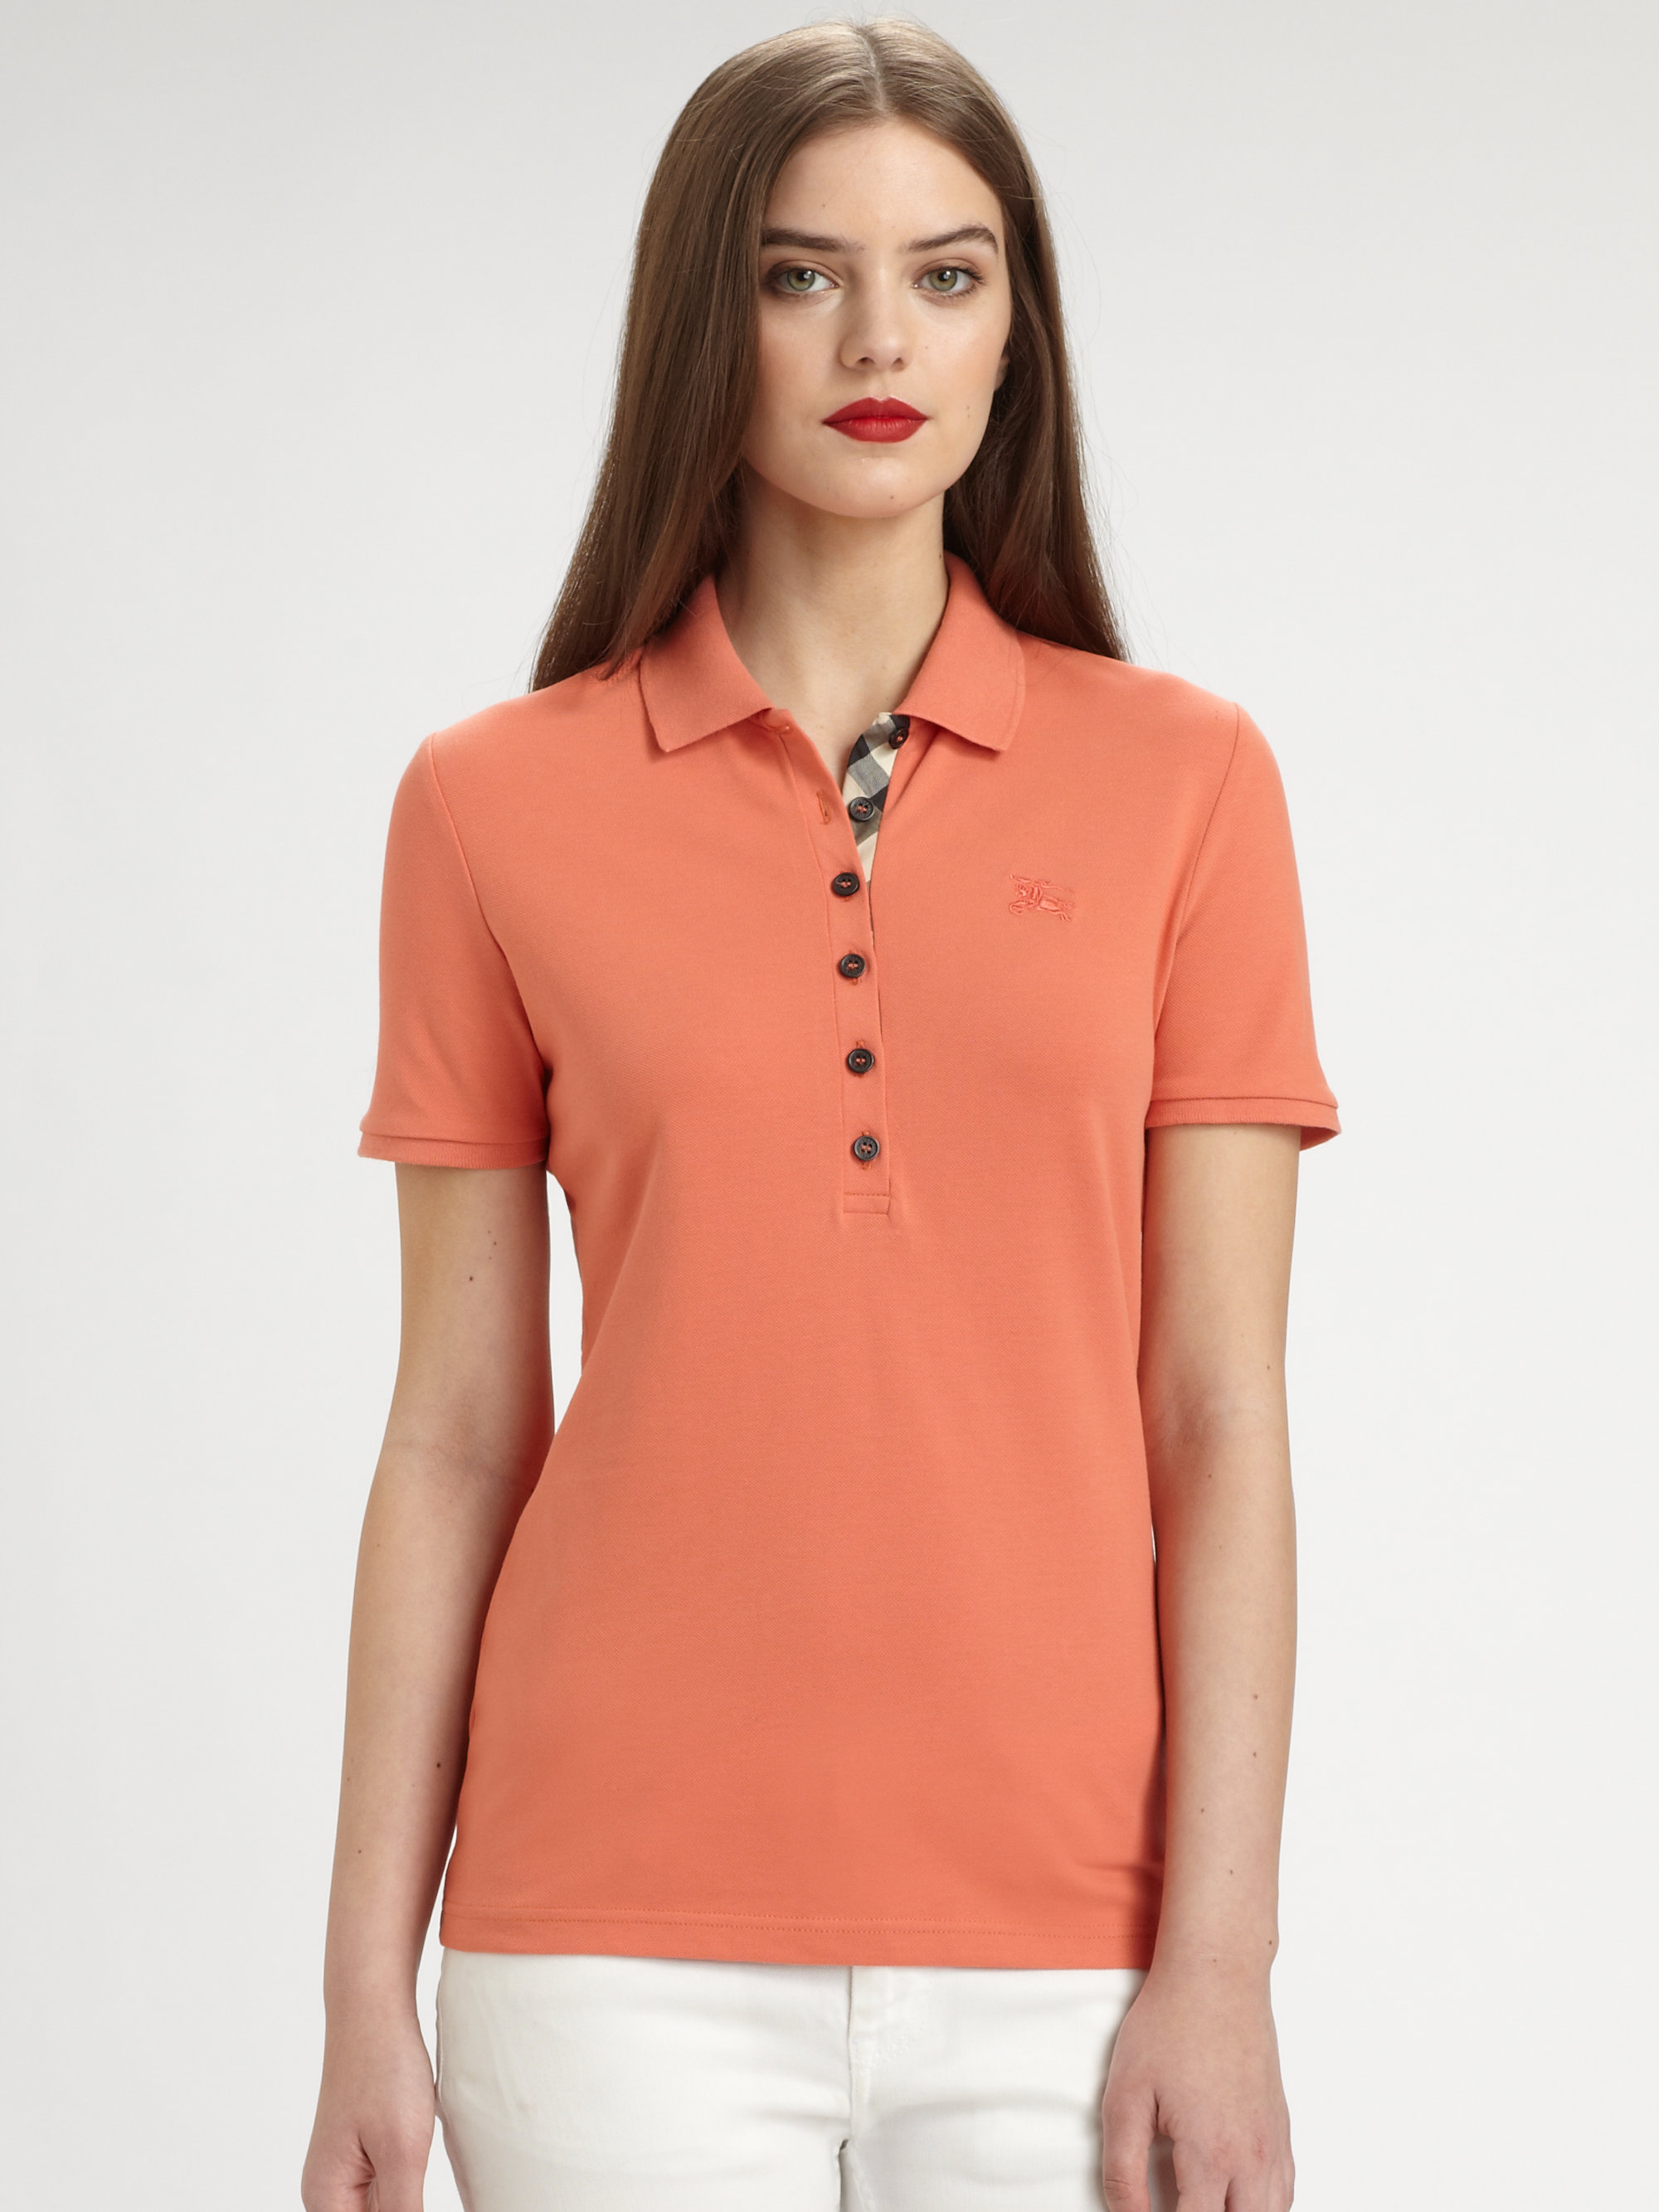 Lyst - Burberry Brit Polo Shirt in Orange